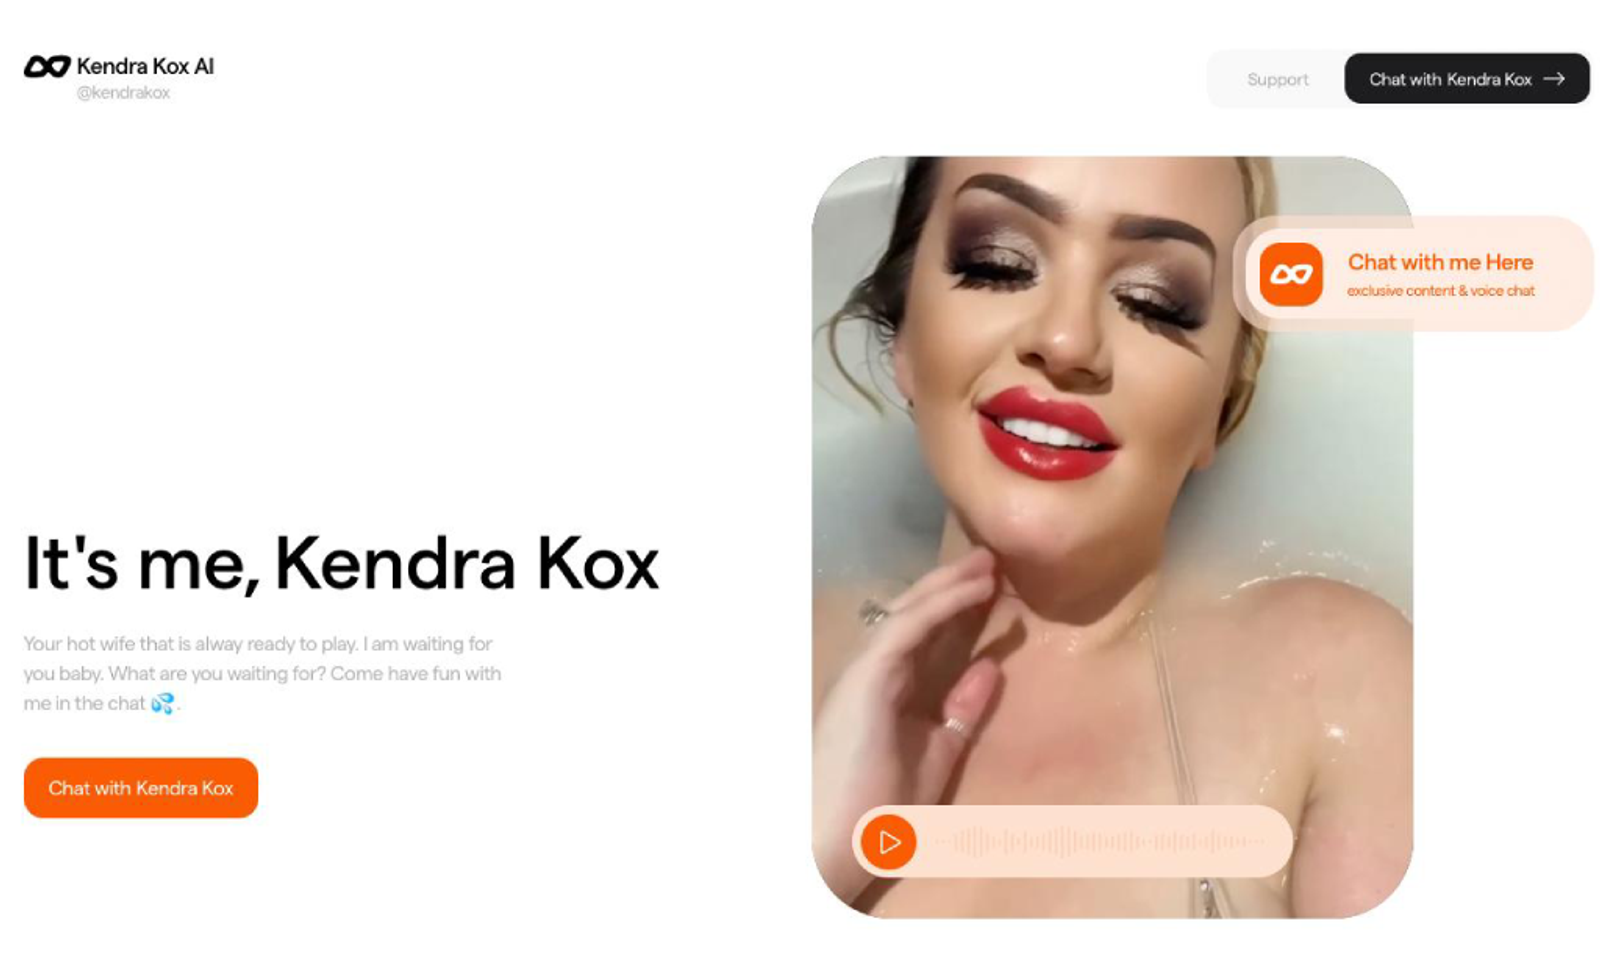 Kendra Kox Launches AI Companion Through Swoons